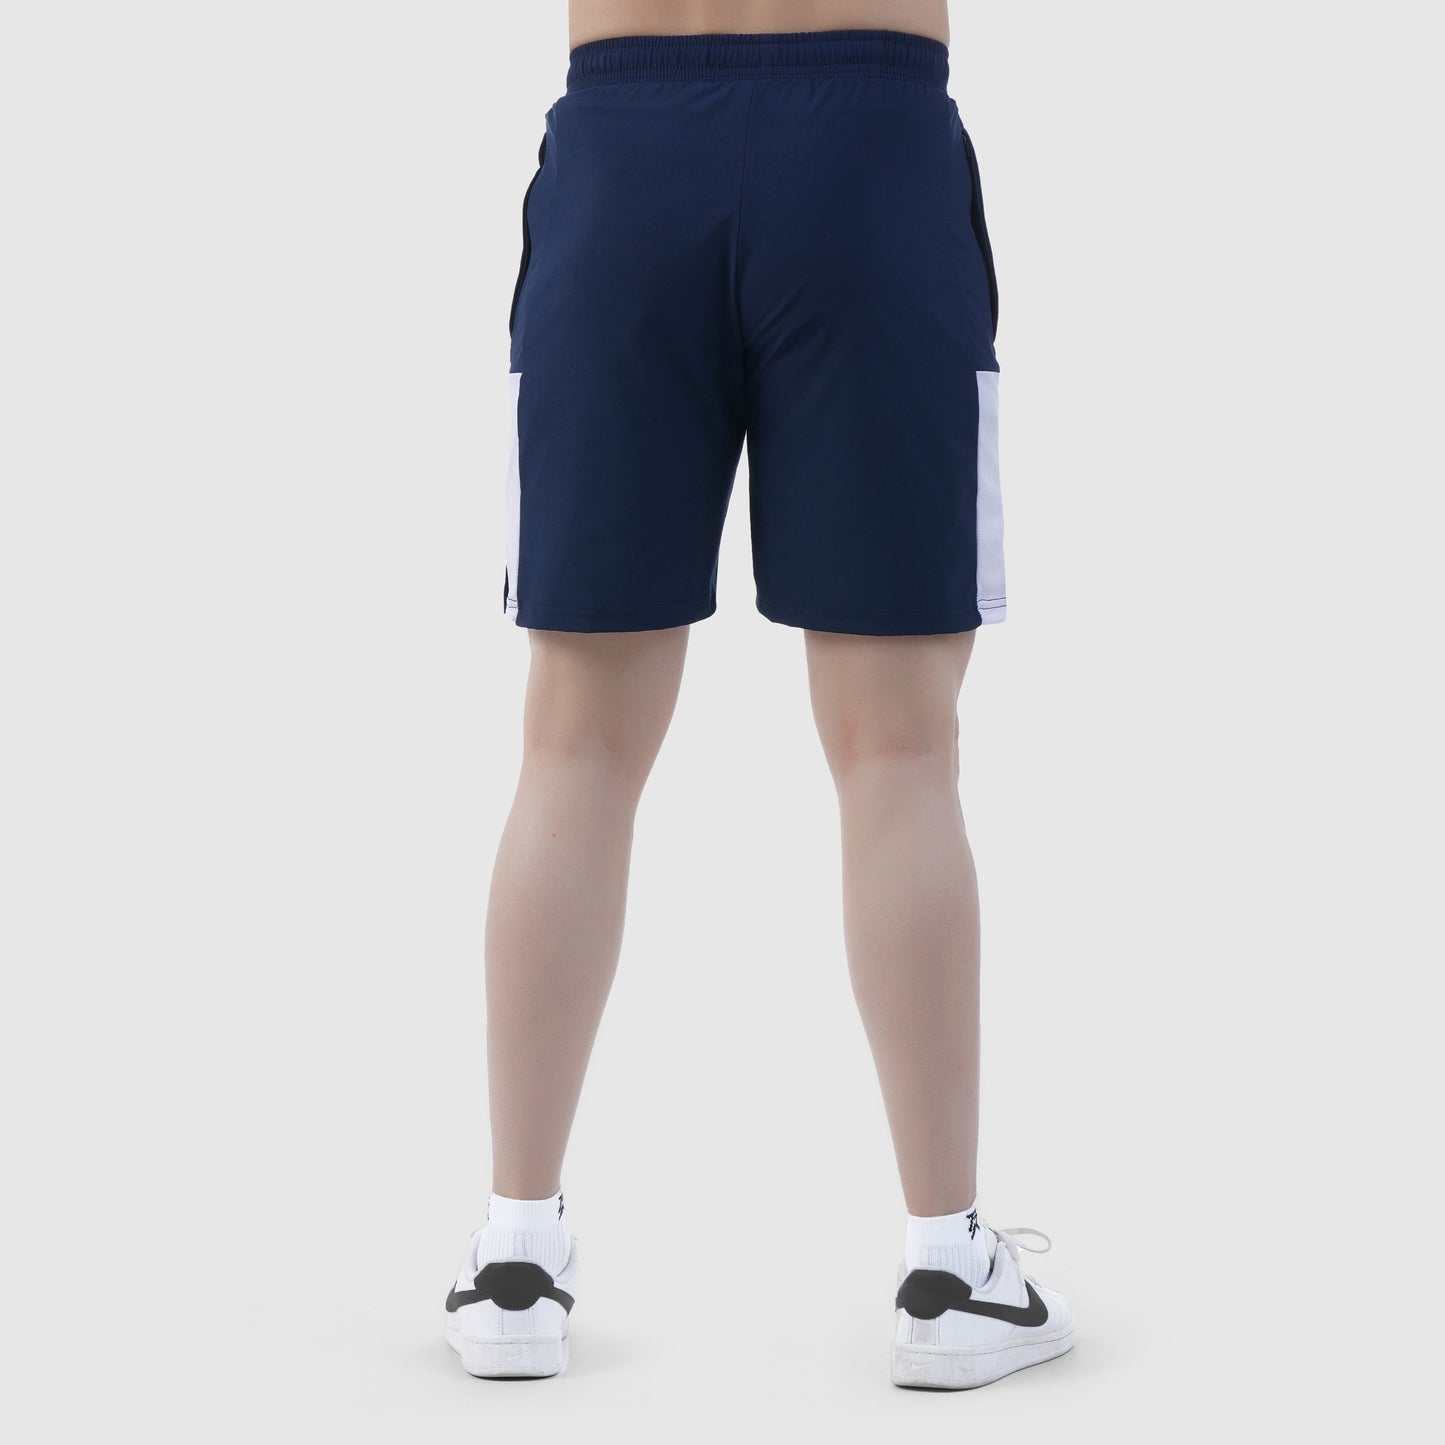 PowerWick Shorts (Navy)